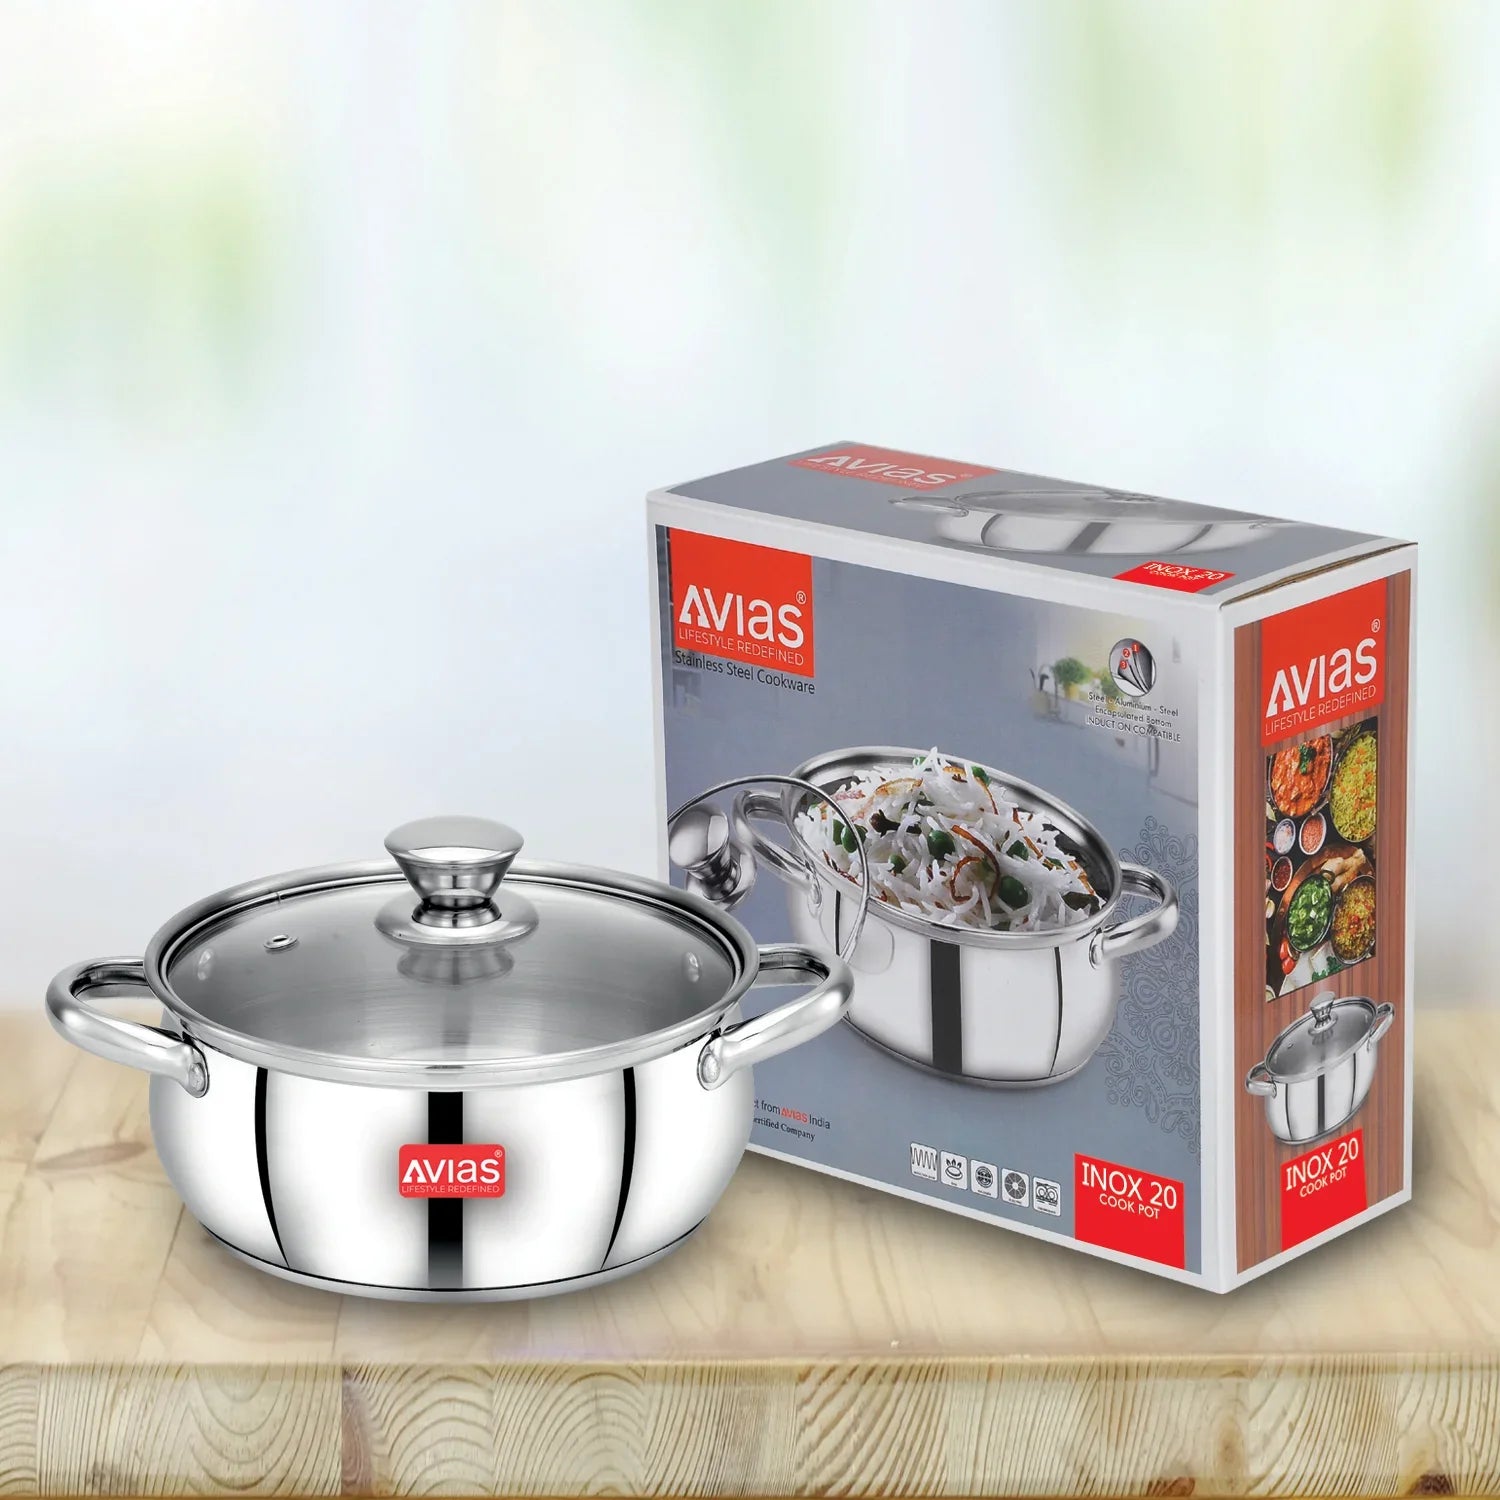 AVIAS Inox IB stainless steel cookpot package